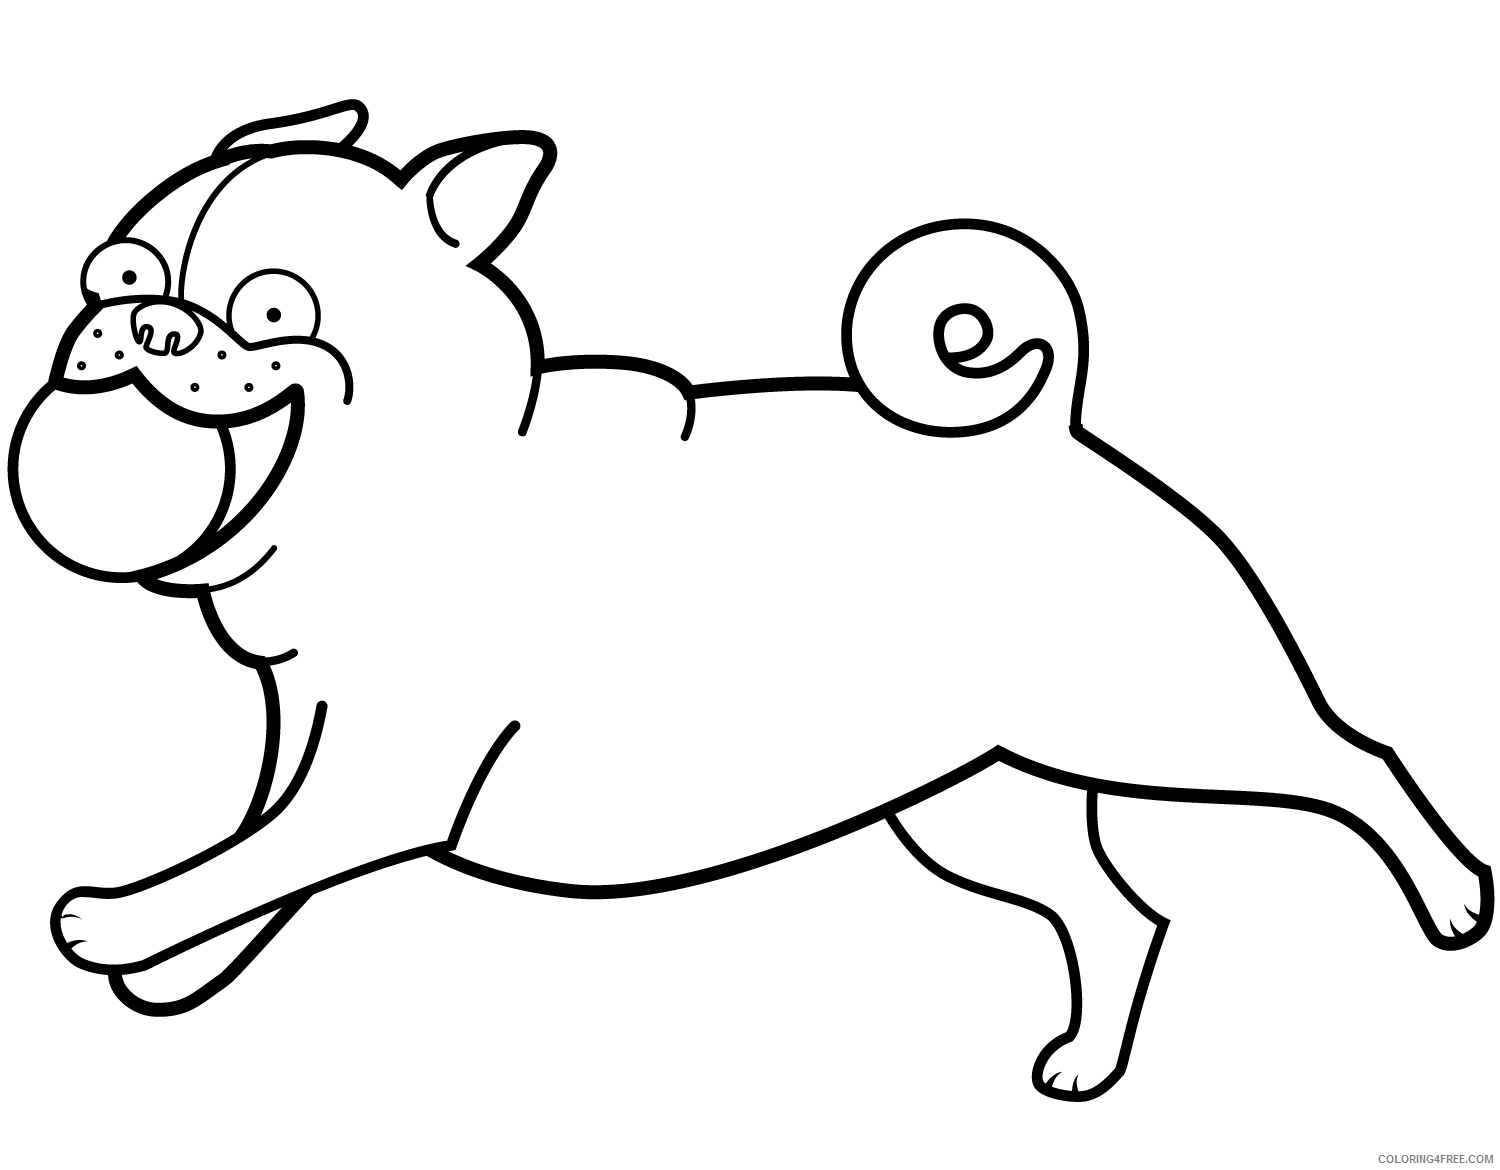 Pug Coloring Pages Animal Printable Sheets funny pug playing ball 2021 4048 Coloring4free